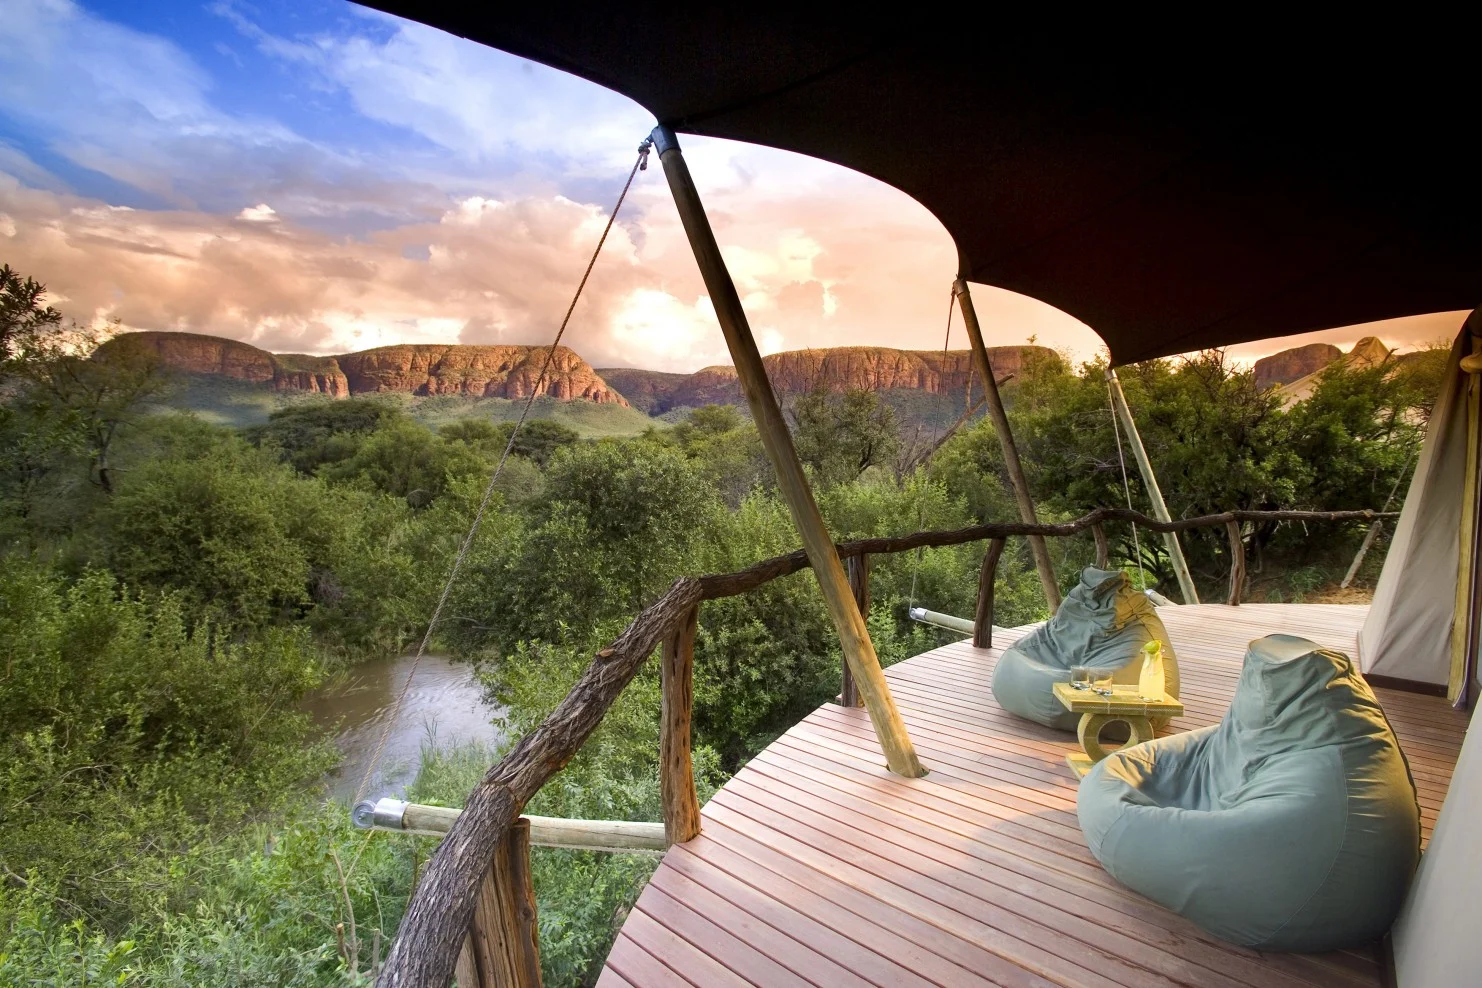 Honeymoon hotel in Marakele National Park, South Africa